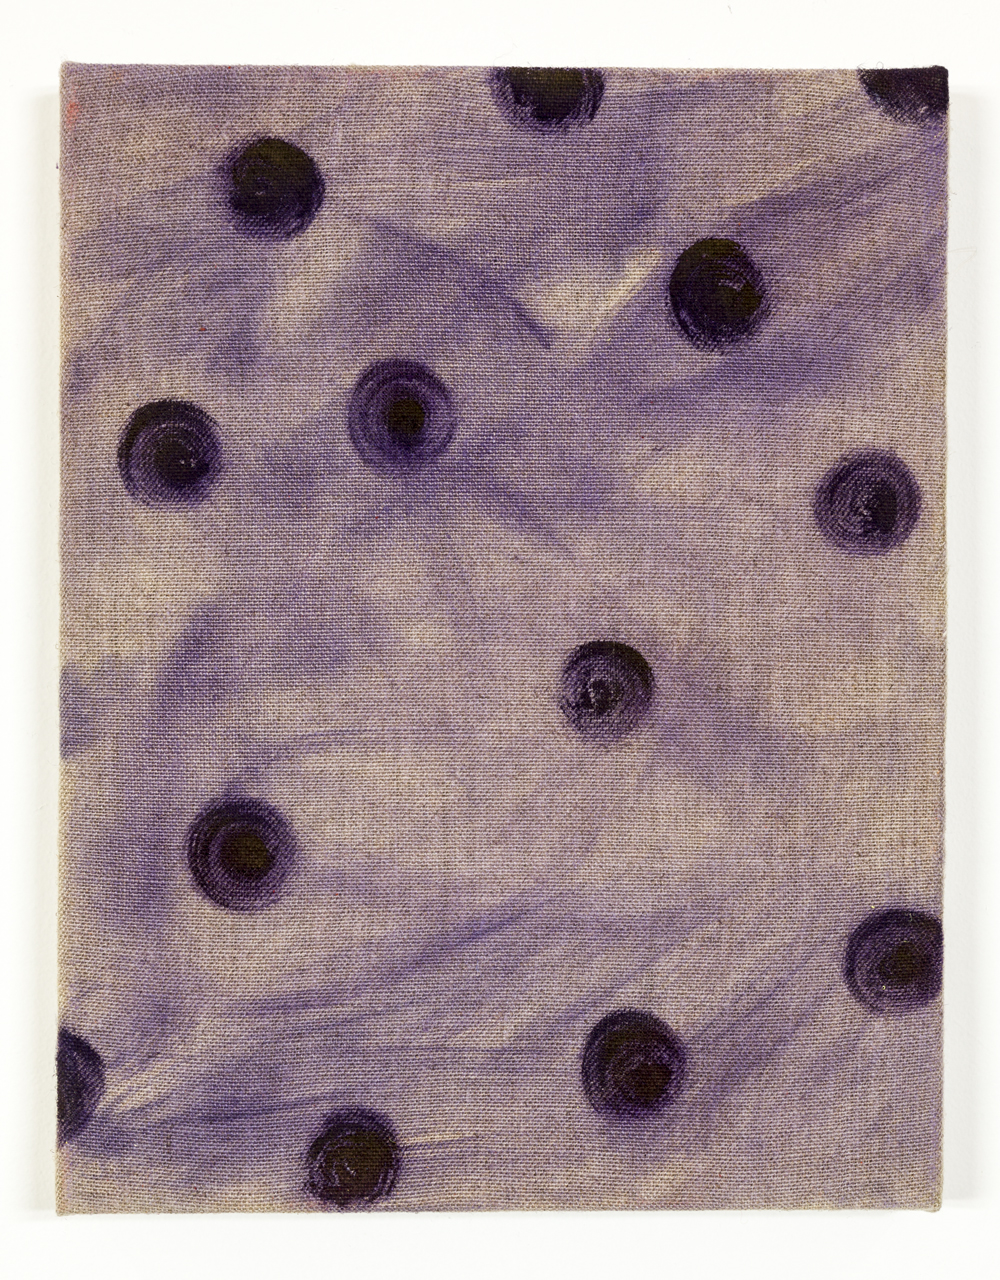 Untitled, Oil on unprimed linen, 14"x11", 2016